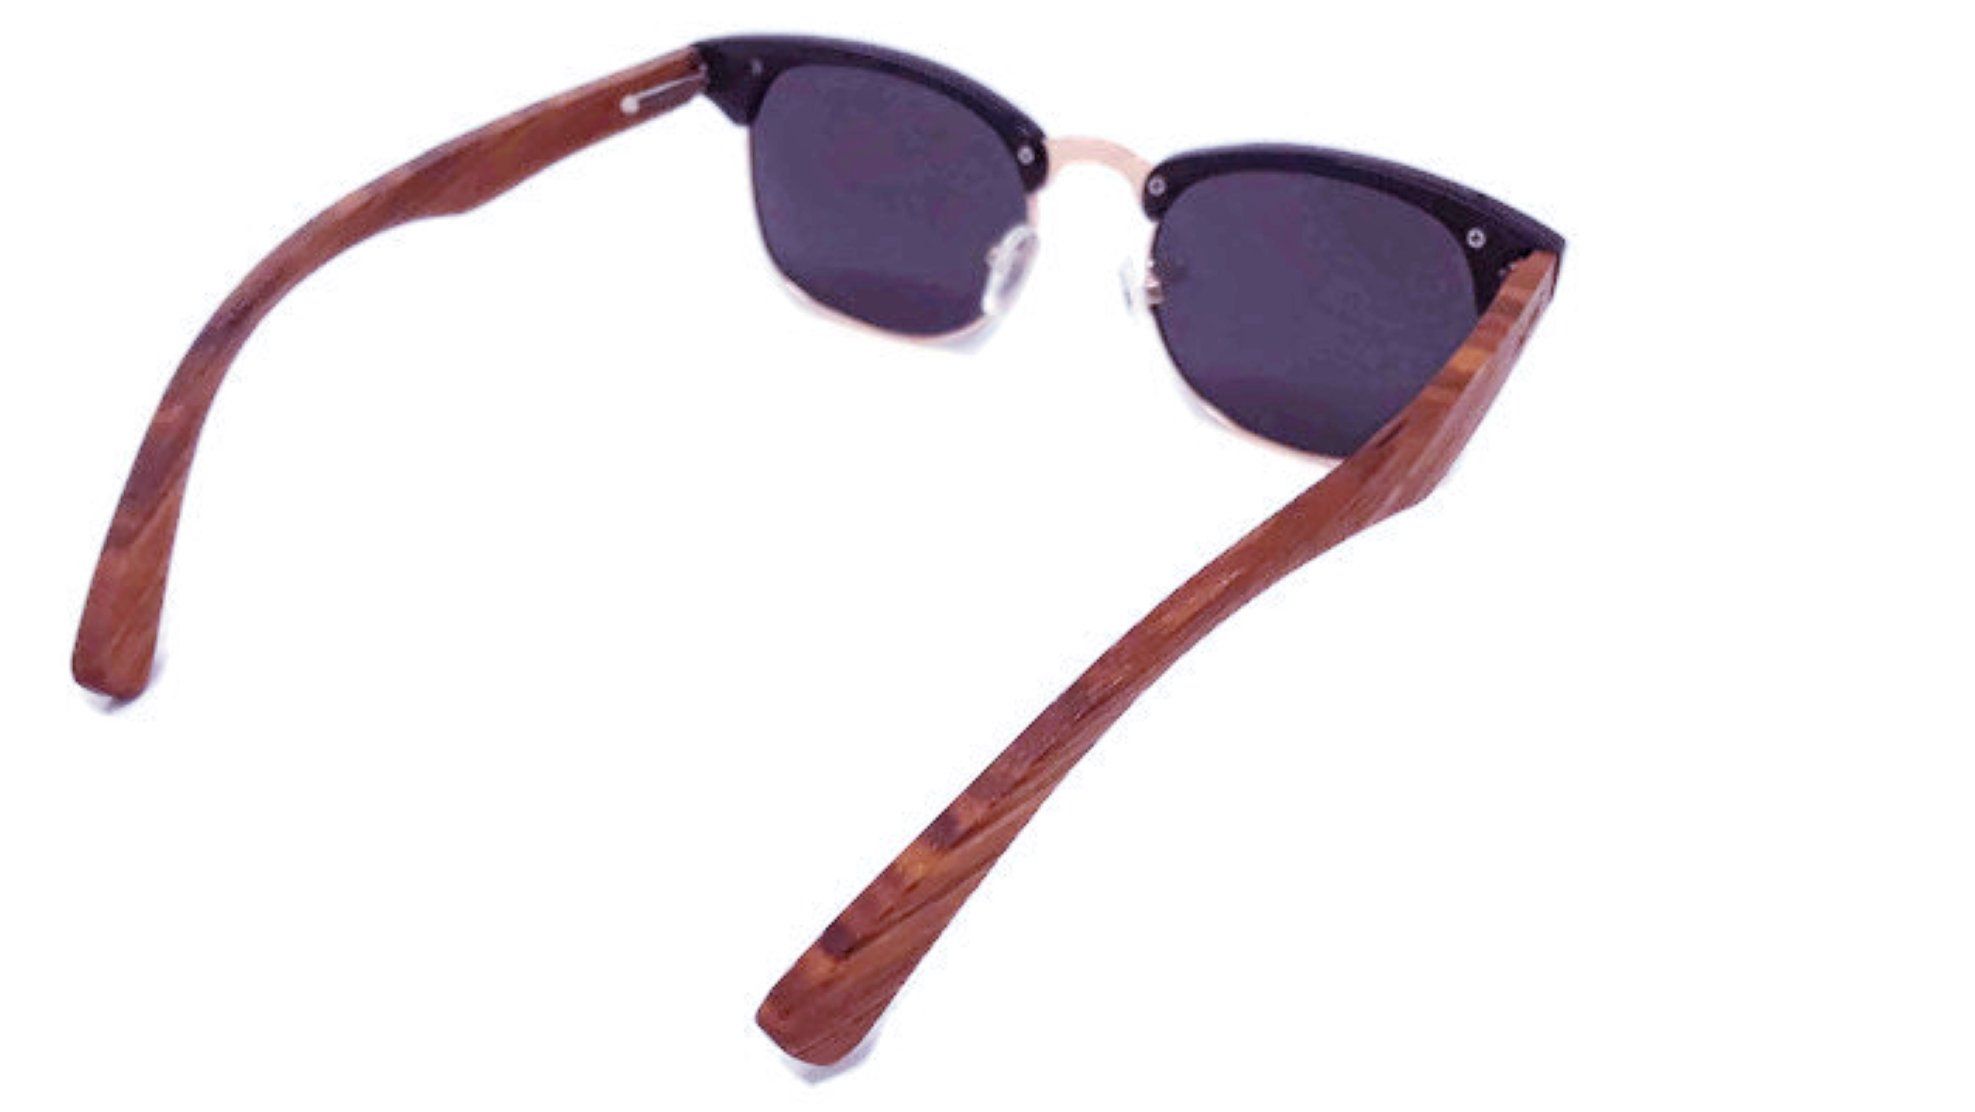 Real Walnut Wood Club Style Sunglasses, Polarized Sunglasses 